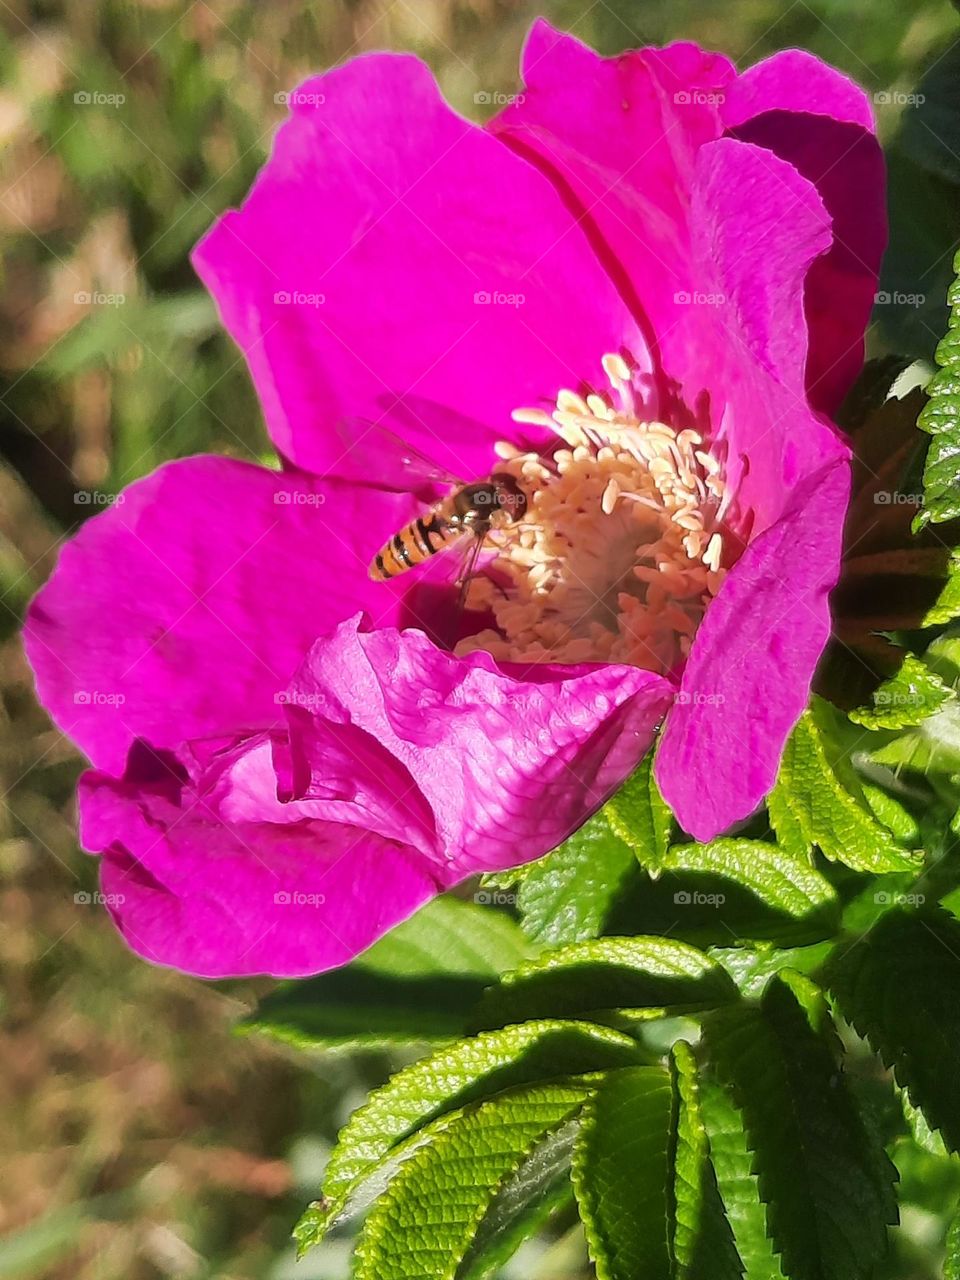 litlle wasp feeding on wild rose